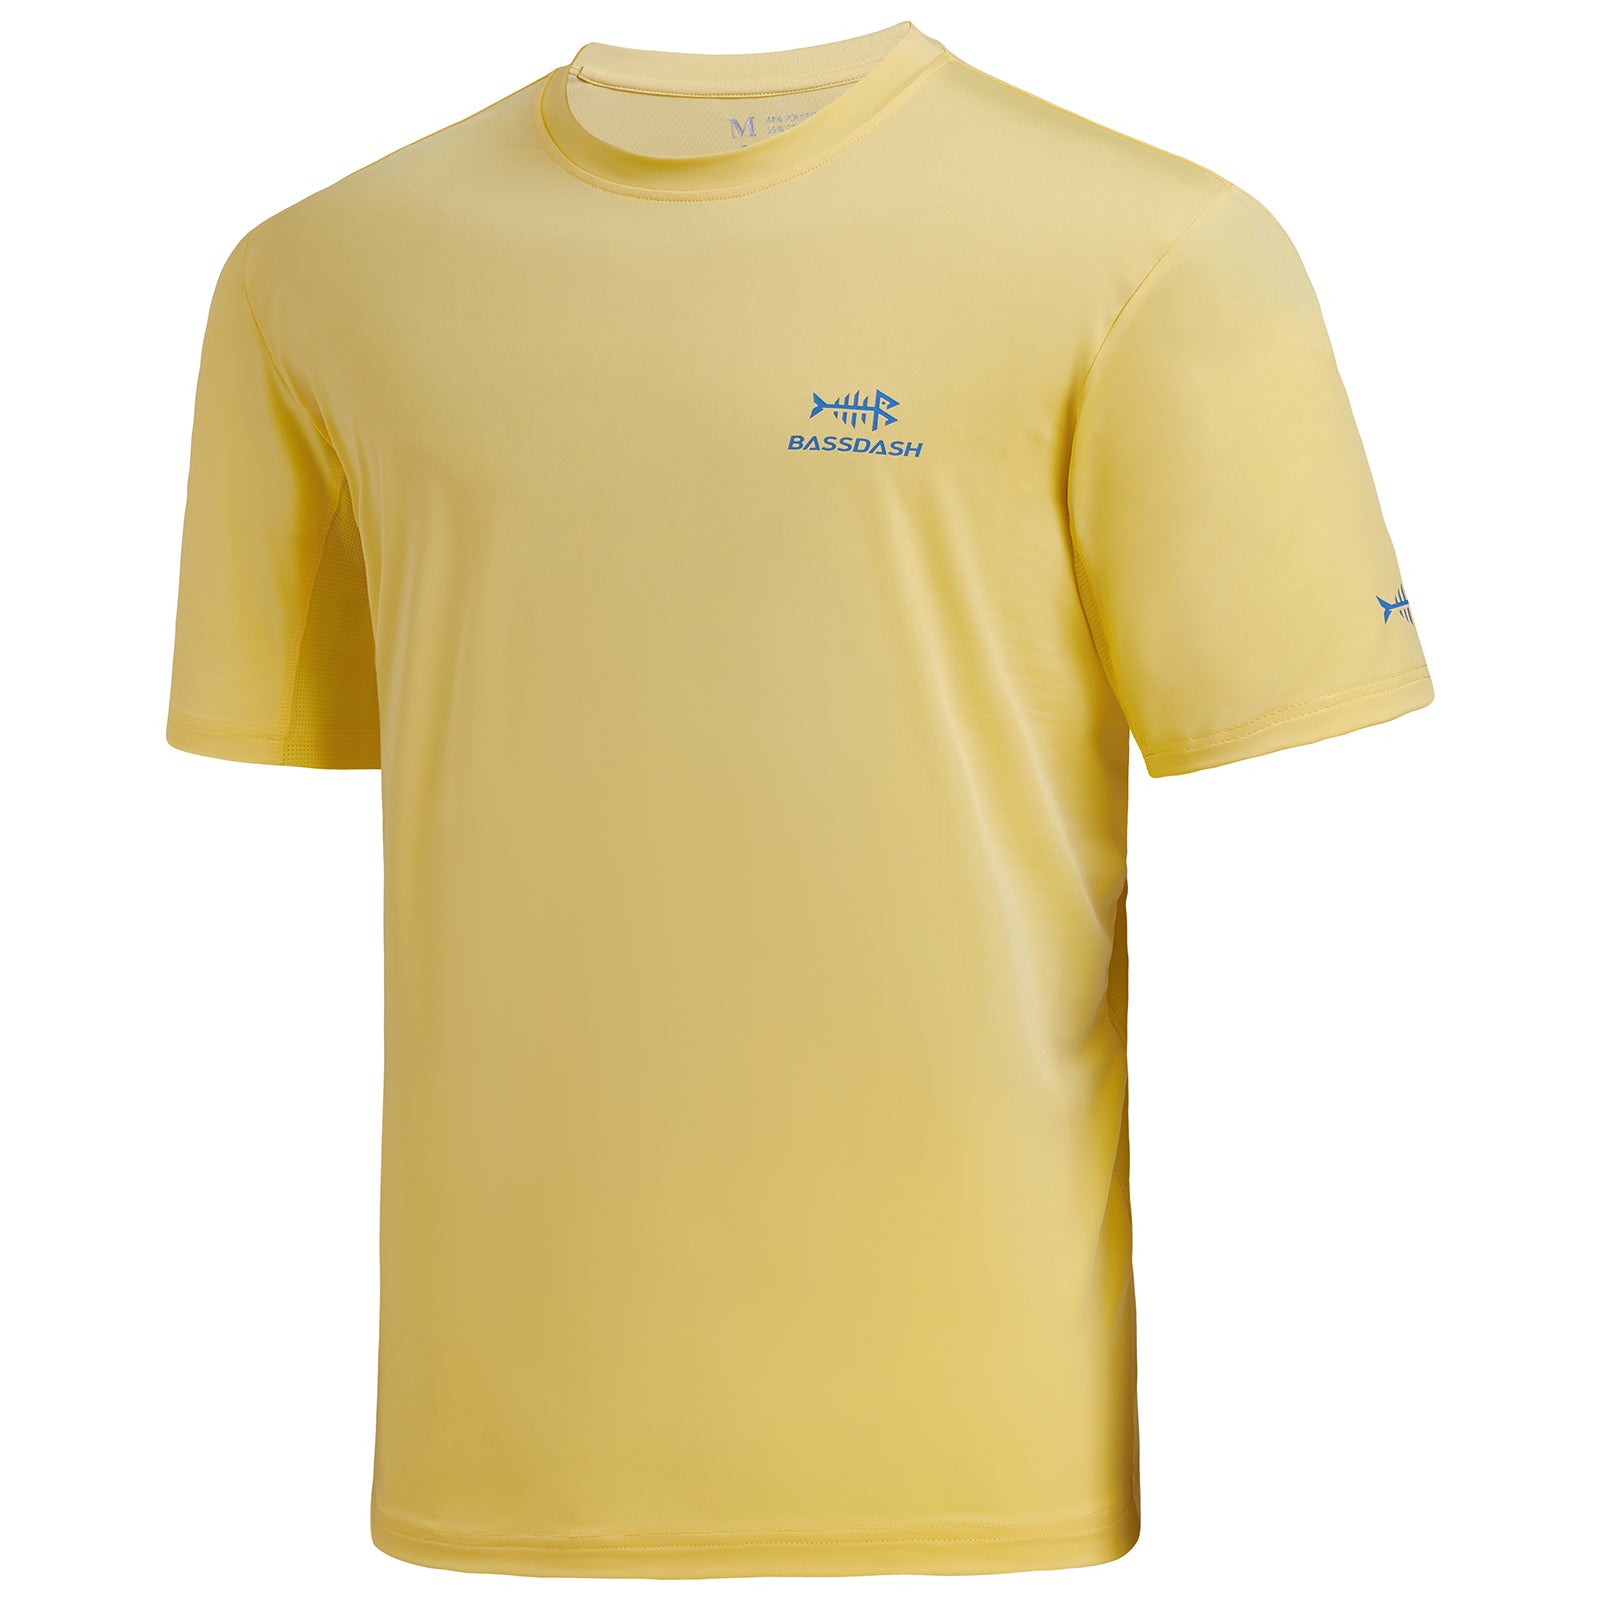 Palmyth Men's Fishing Shirt Short Sleeve Sun Protection UV UPF 50+ SPF T-Shirt